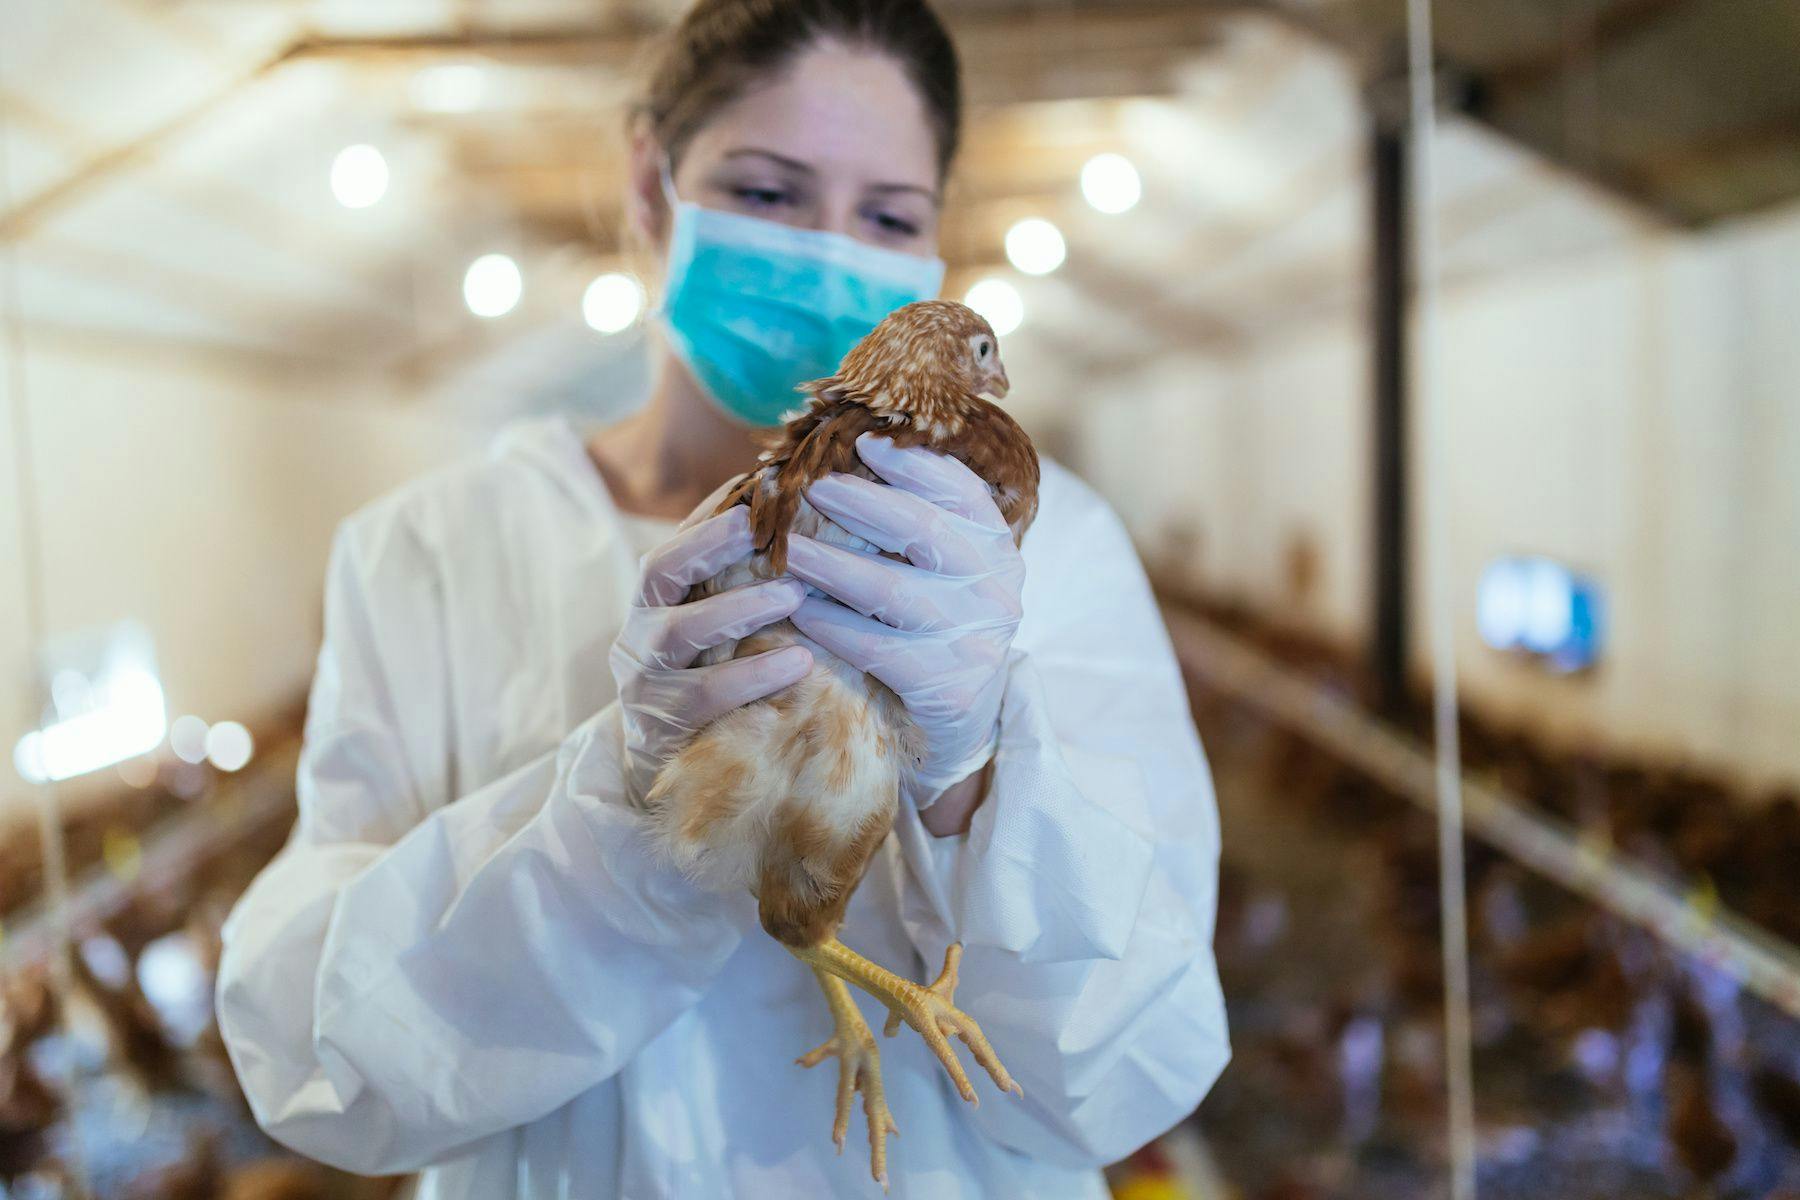 Avian flu transmission to humans